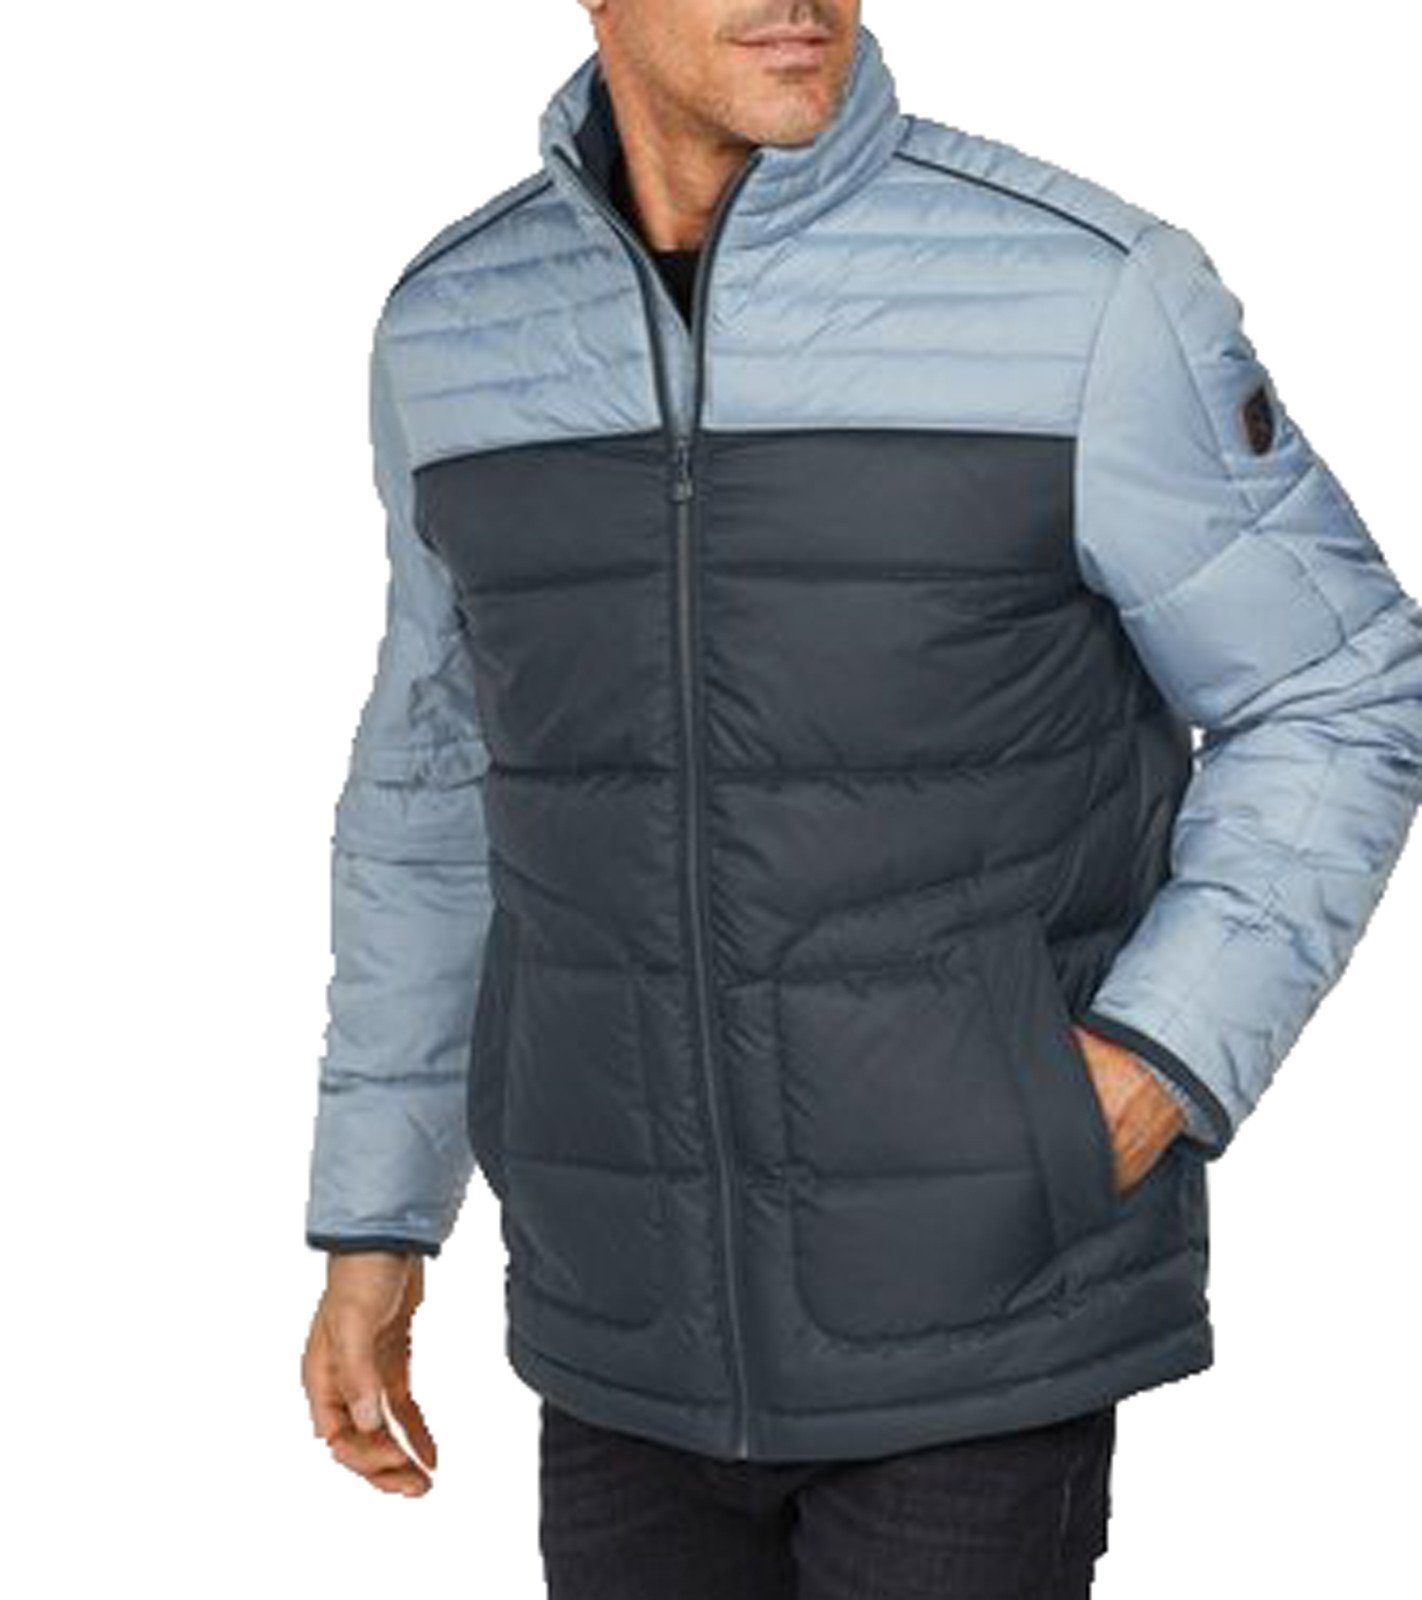 S4 Jackets Winterjacke »S4 JACKETS Robocop Outdoor-Jacke schicke Herren  Jacke mit coolem Colorblocking-Design Winter-Jacke Navy« online kaufen |  OTTO